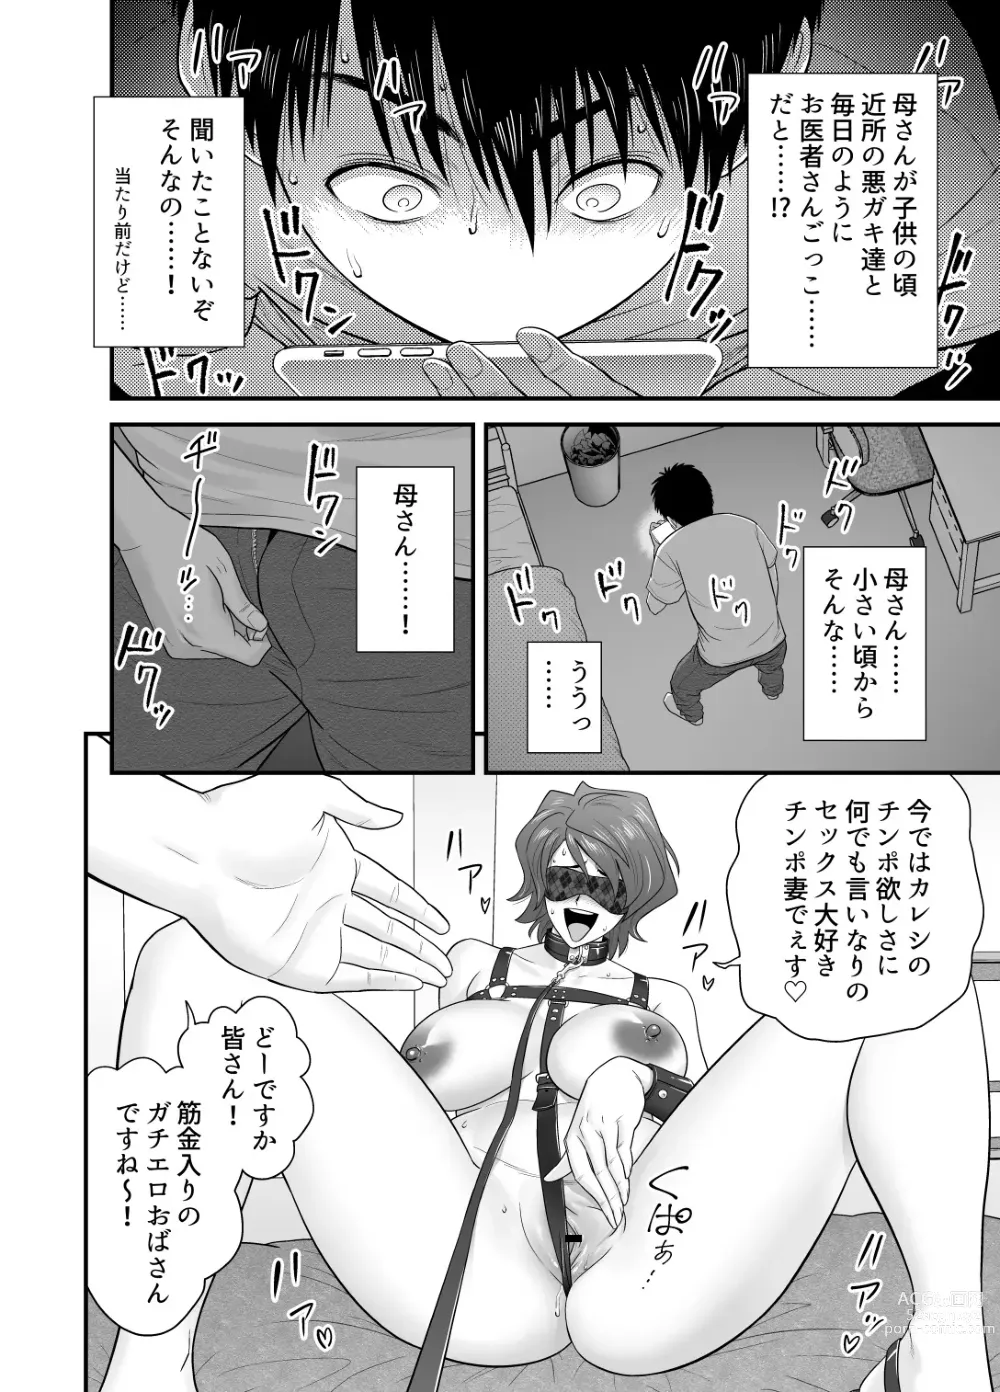 Page 14 of doujinshi My Motherfucking Friend 3